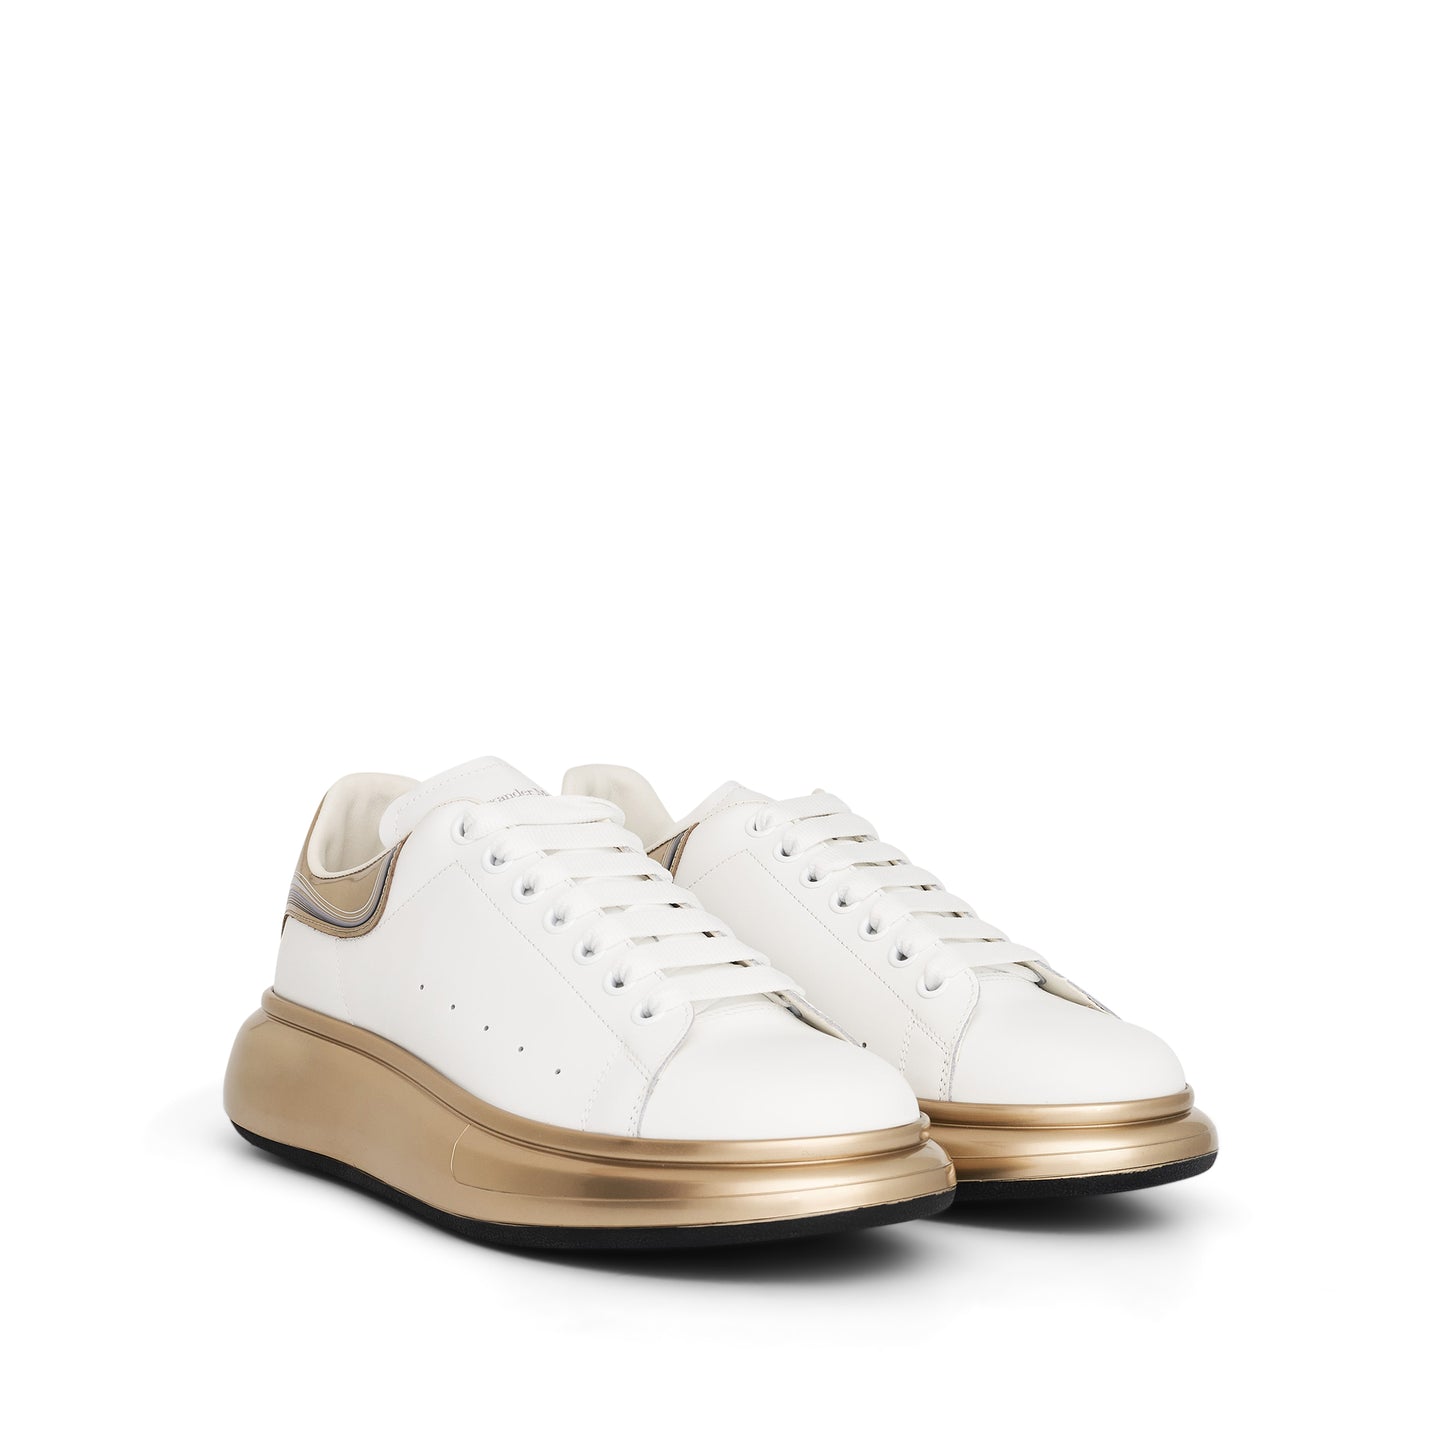 Larry Oversized Sneaker in White/Vanilla